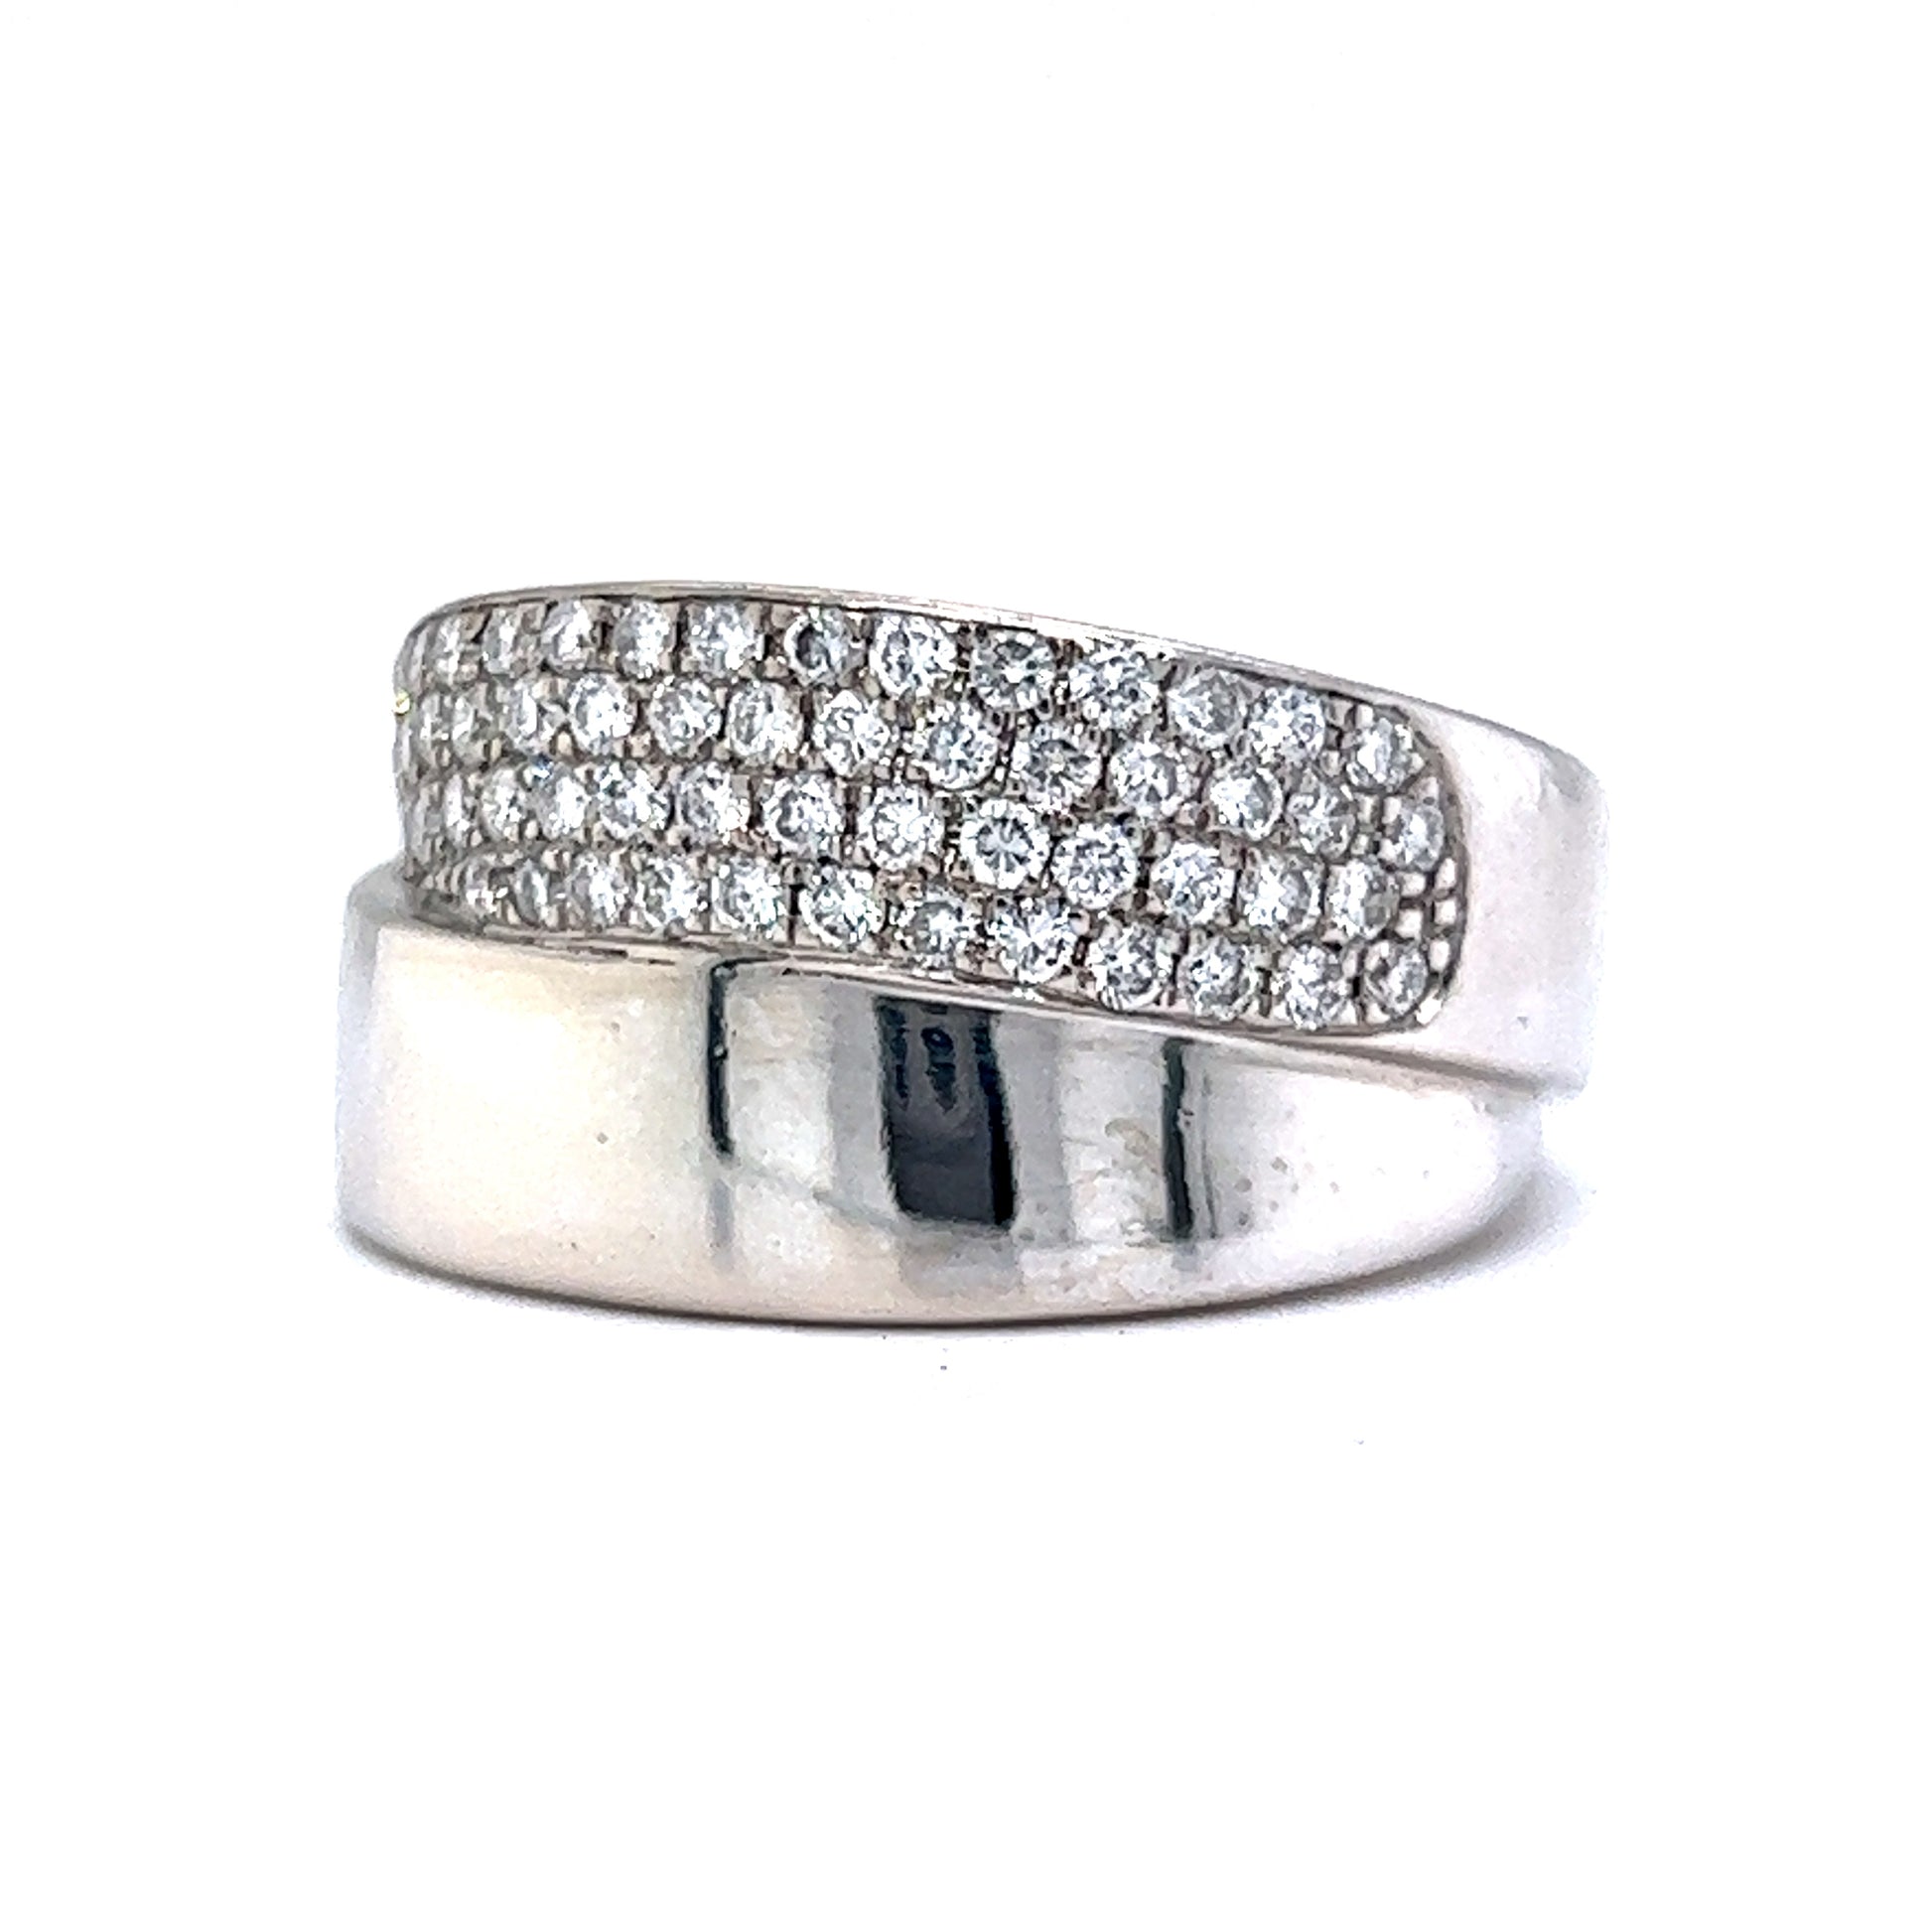 Pave Diamond Overlap Ring in 14k White GoldComposition: 14 Karat White GoldRing Size: 10.5Total Diamond Weight: 1.16 ctTotal Gram Weight: 11.2 gInscription: 14k